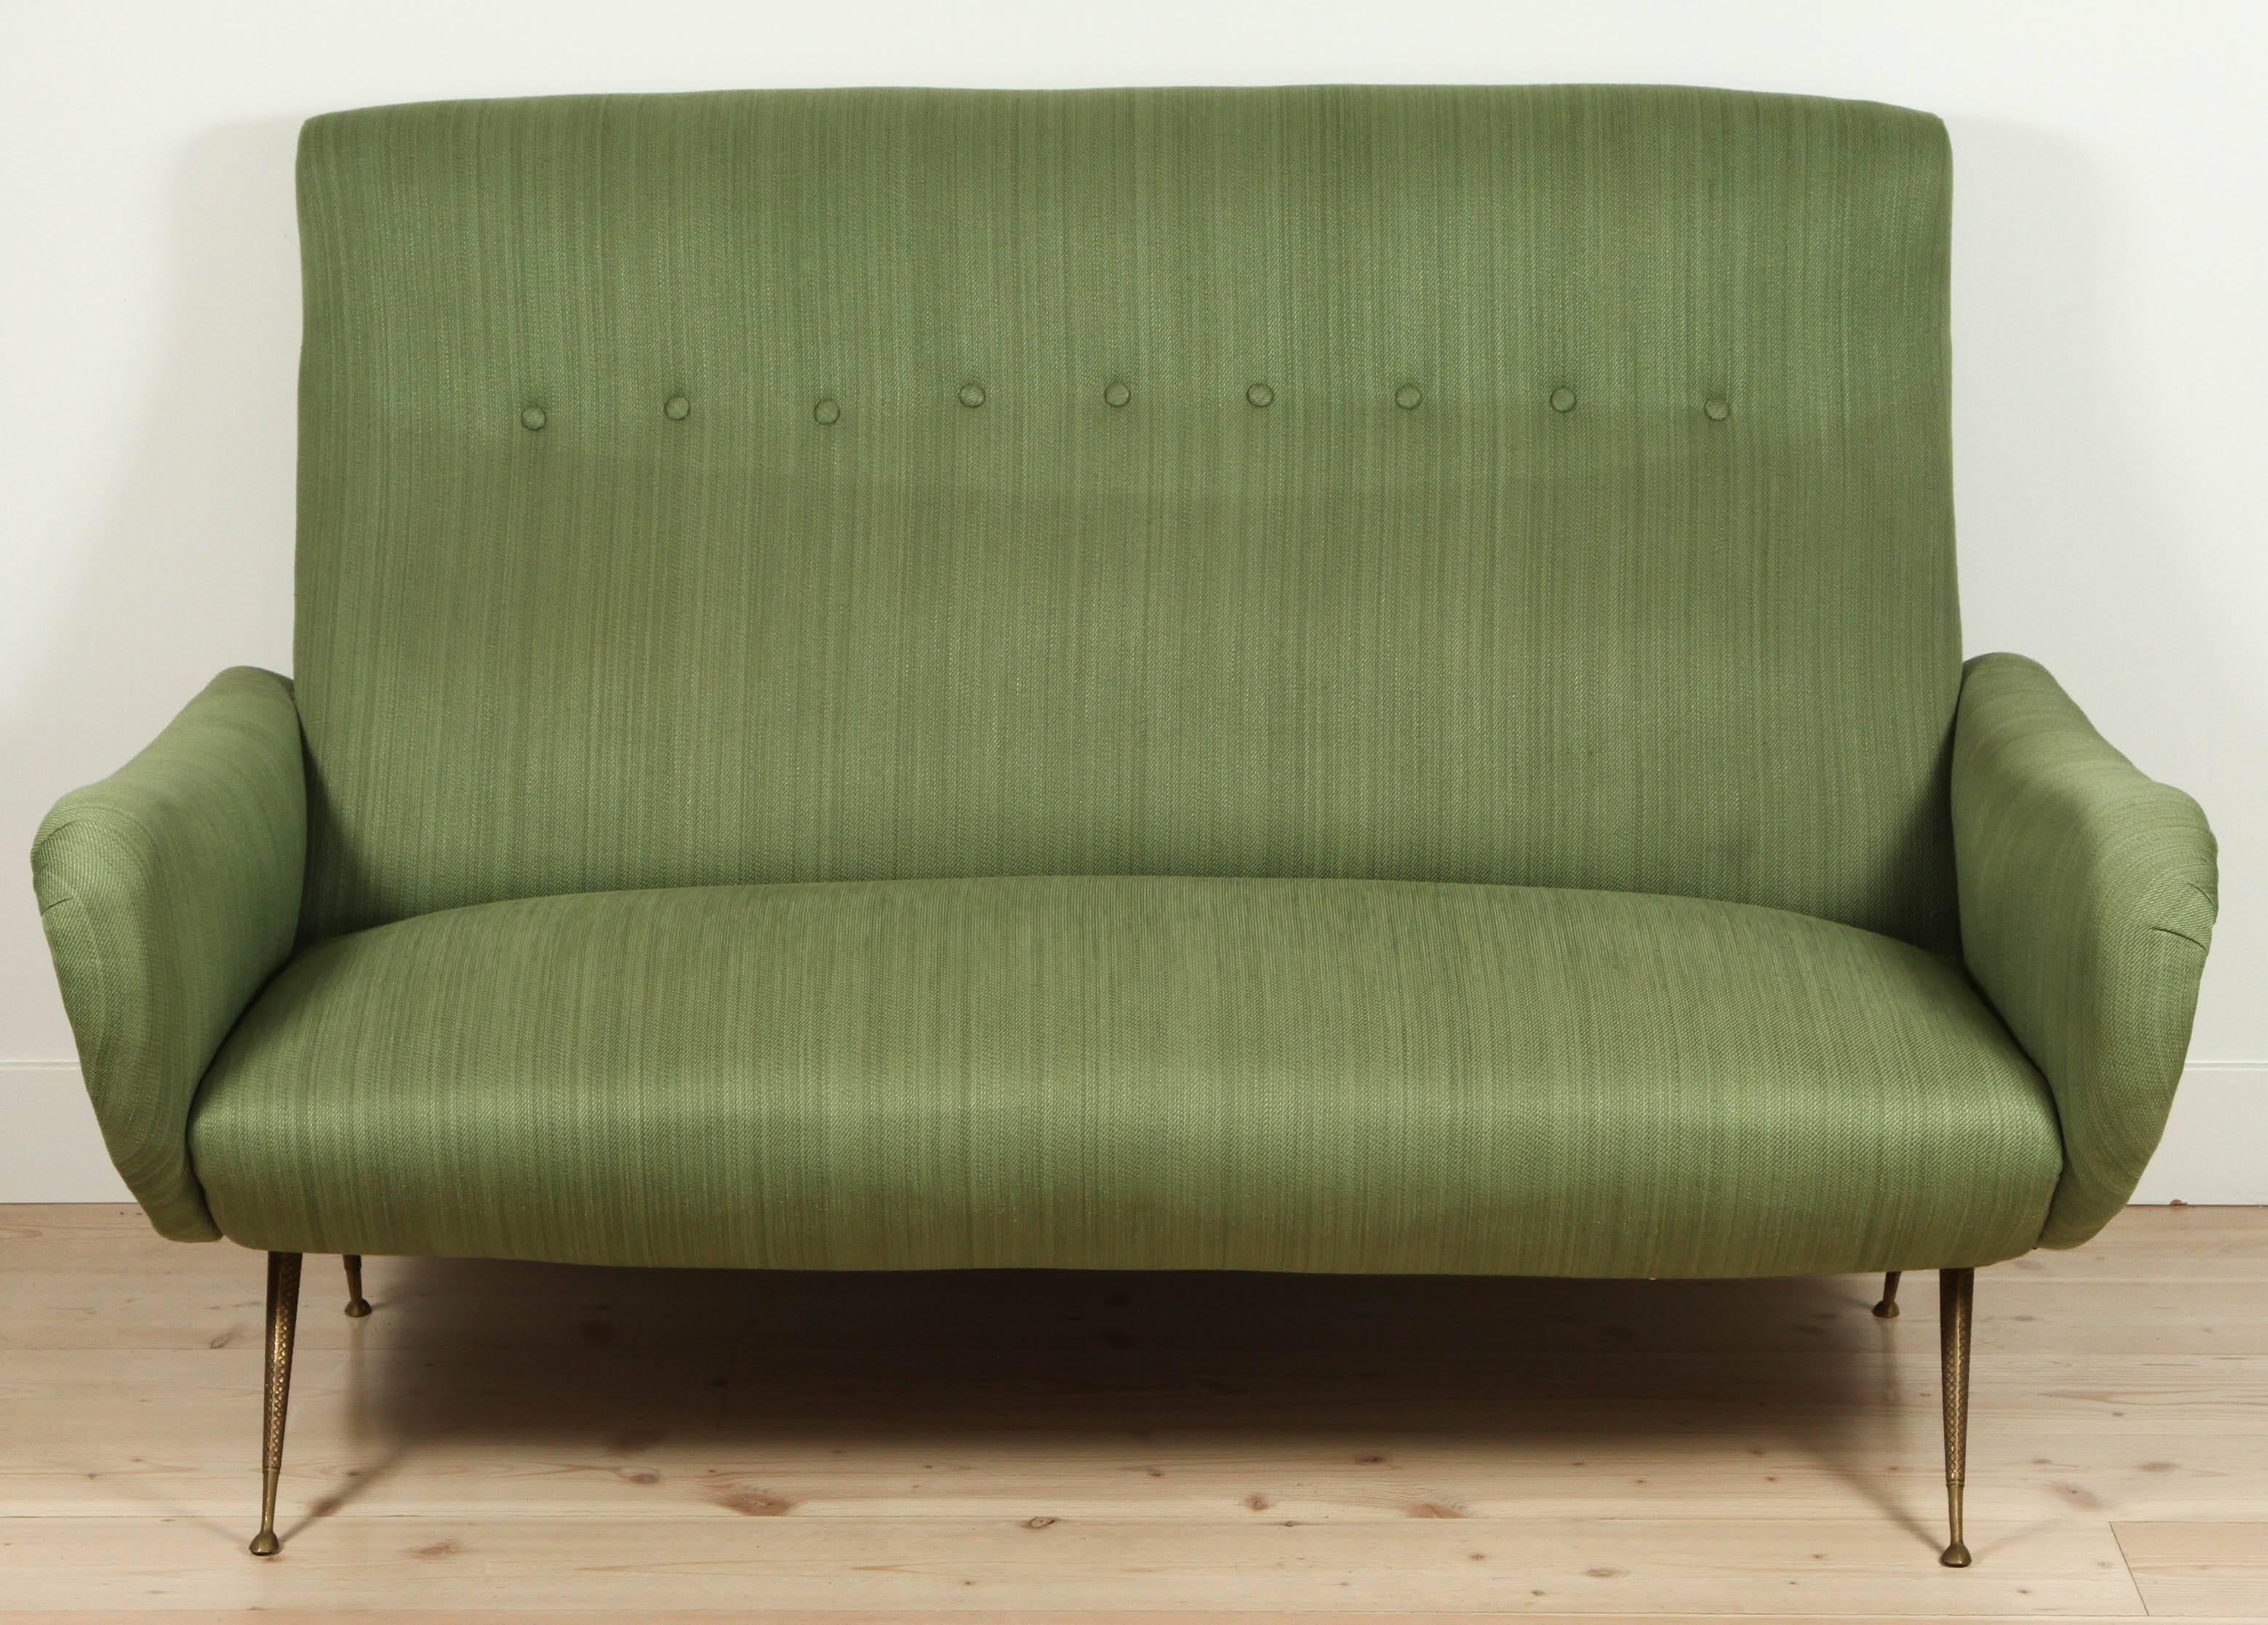 Italian green settee with brass details. All original.